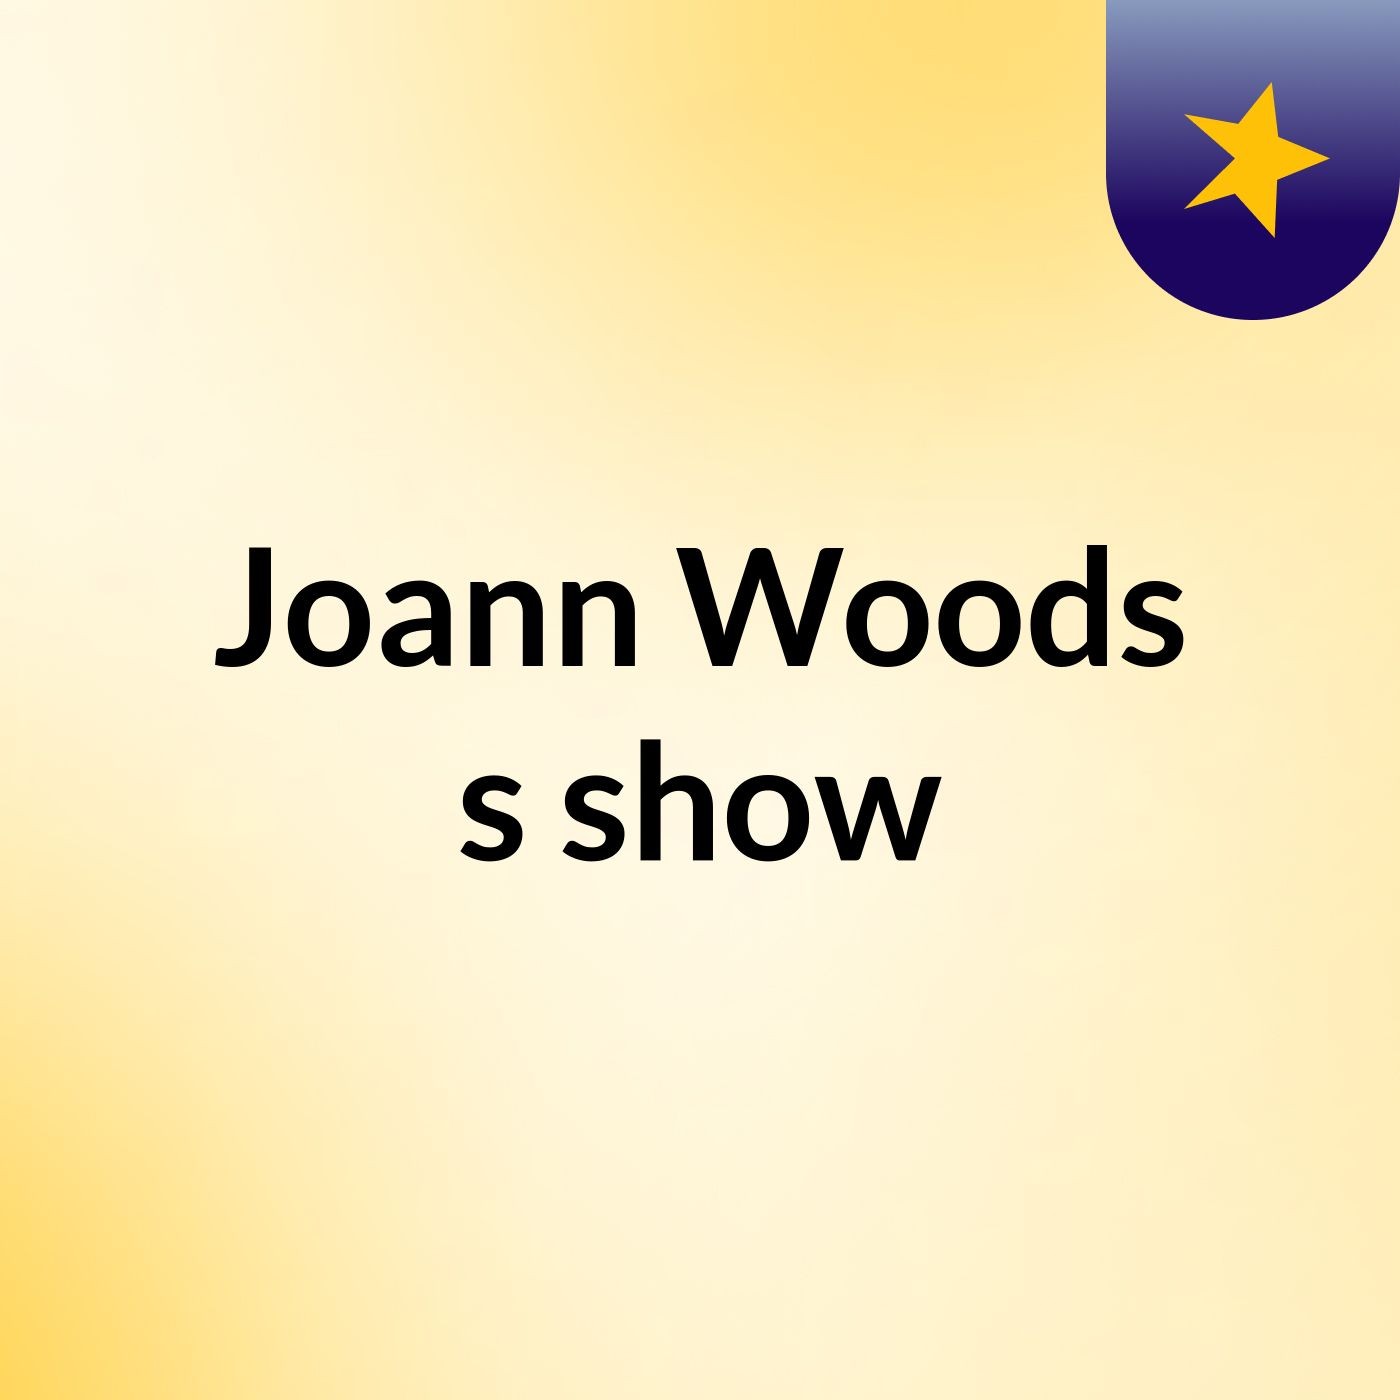 Joann Woods's show